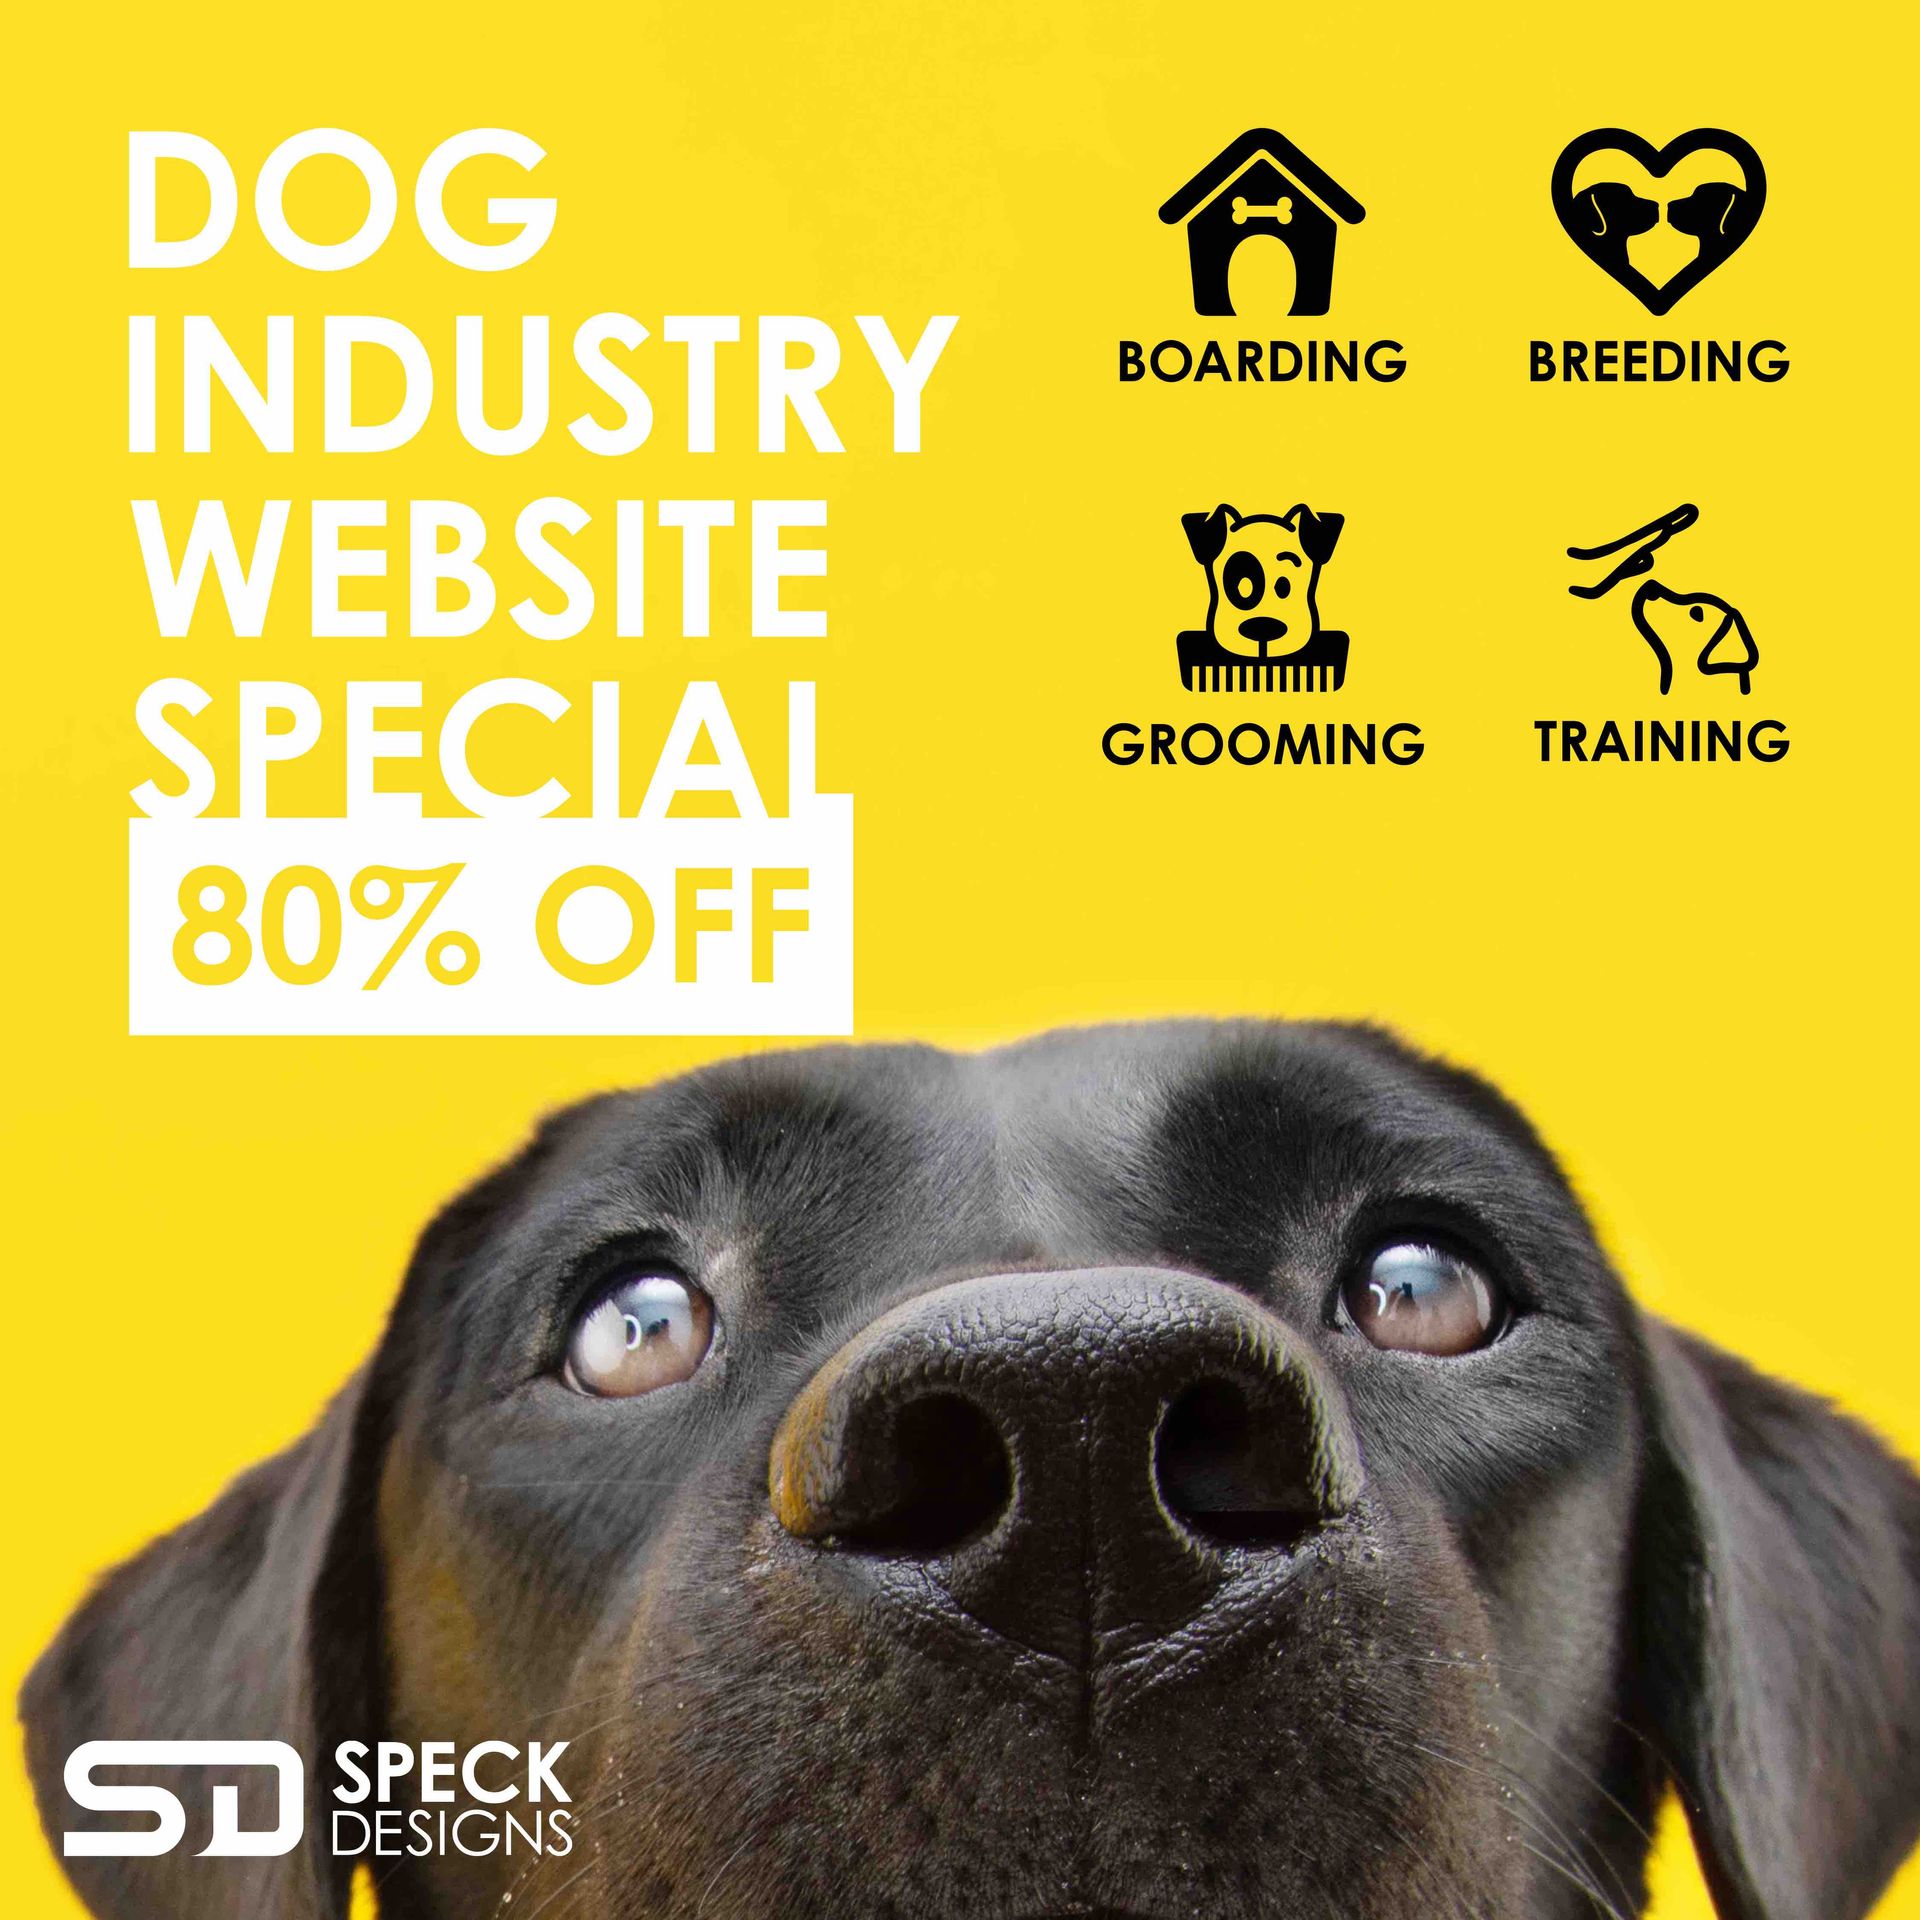 dog industry website special - 80% off